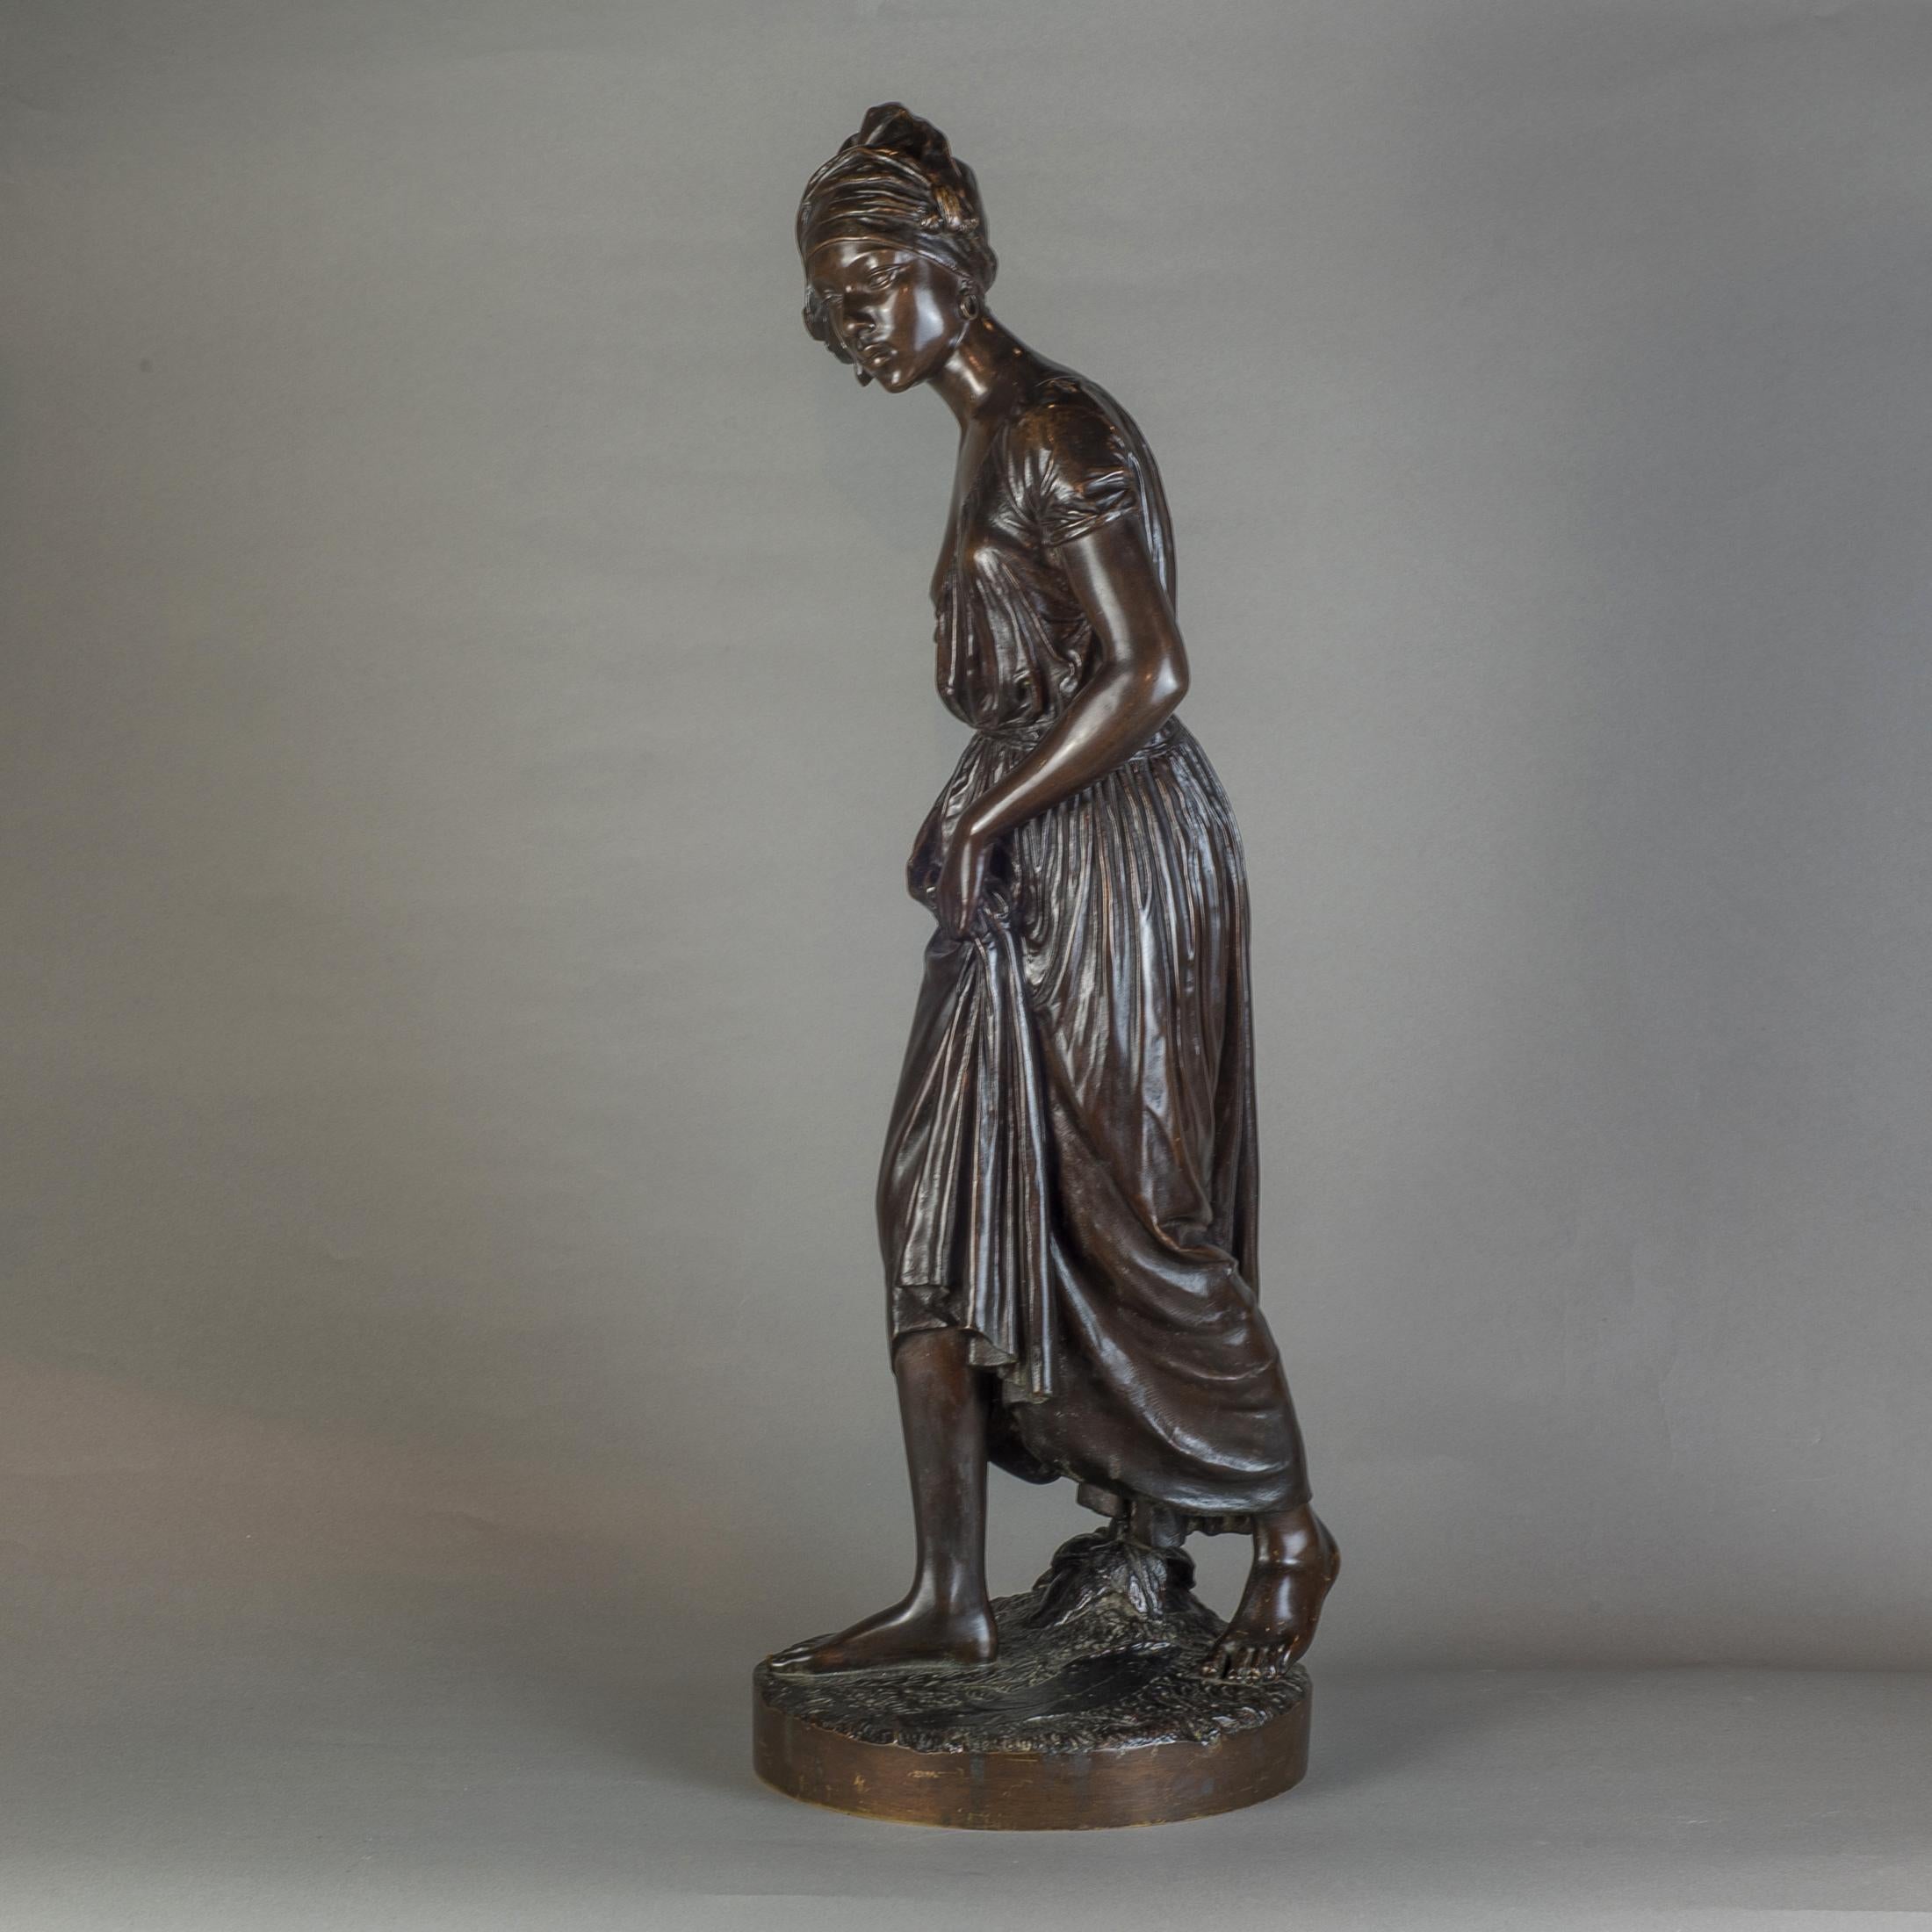 Bronze Sculpture Statue of a Nubian Woman by Cumberworth  - Gold Figurative Sculpture by Charles Cumberworth